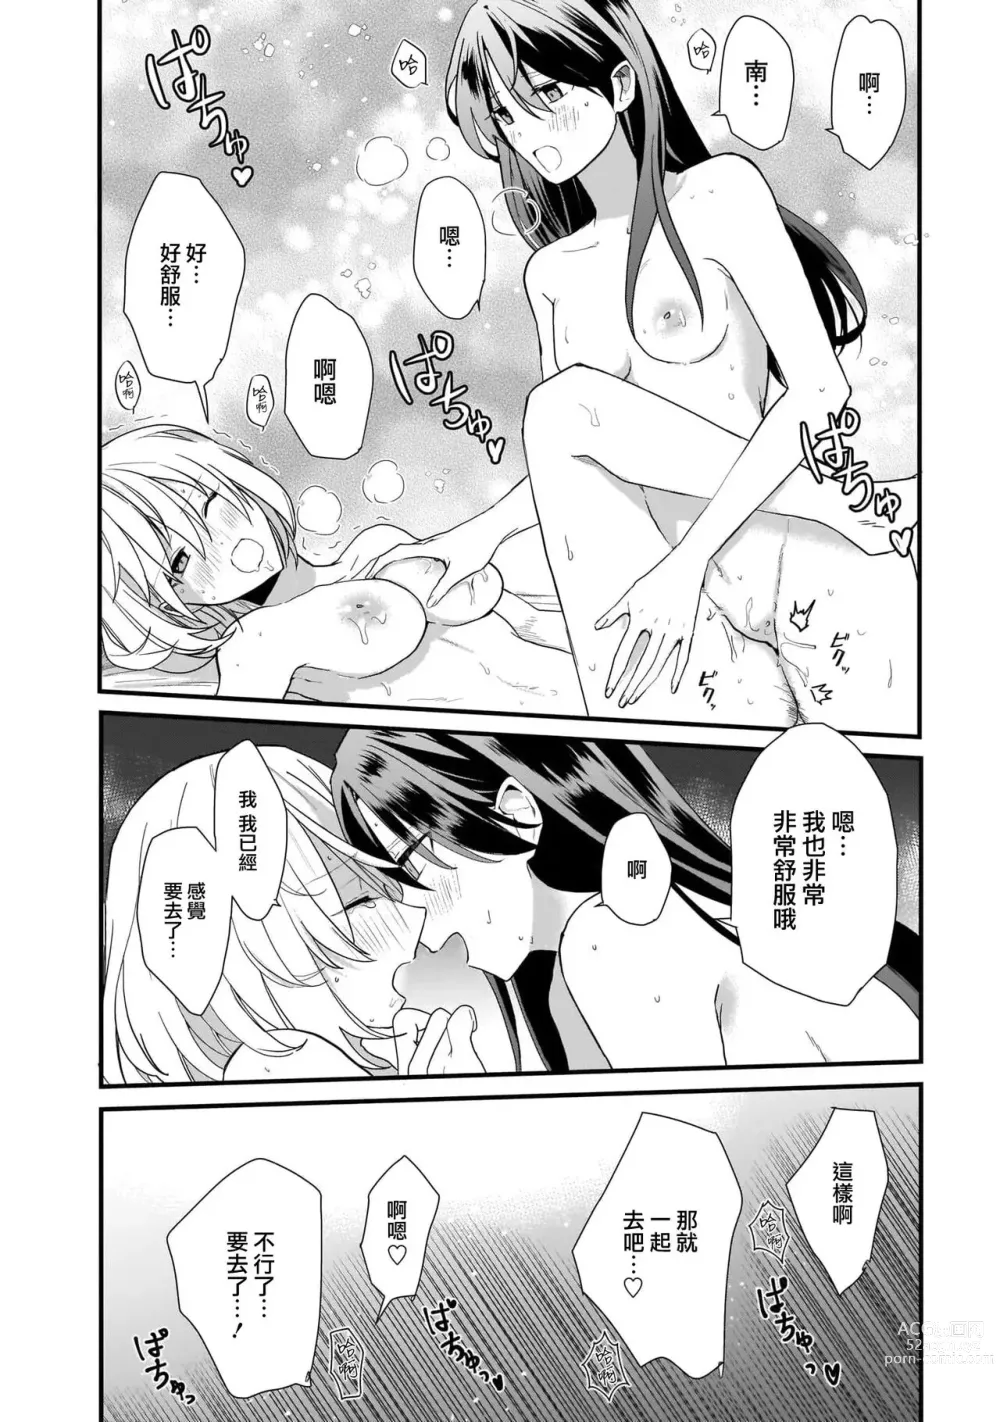 Page 15 of manga 冷却运动